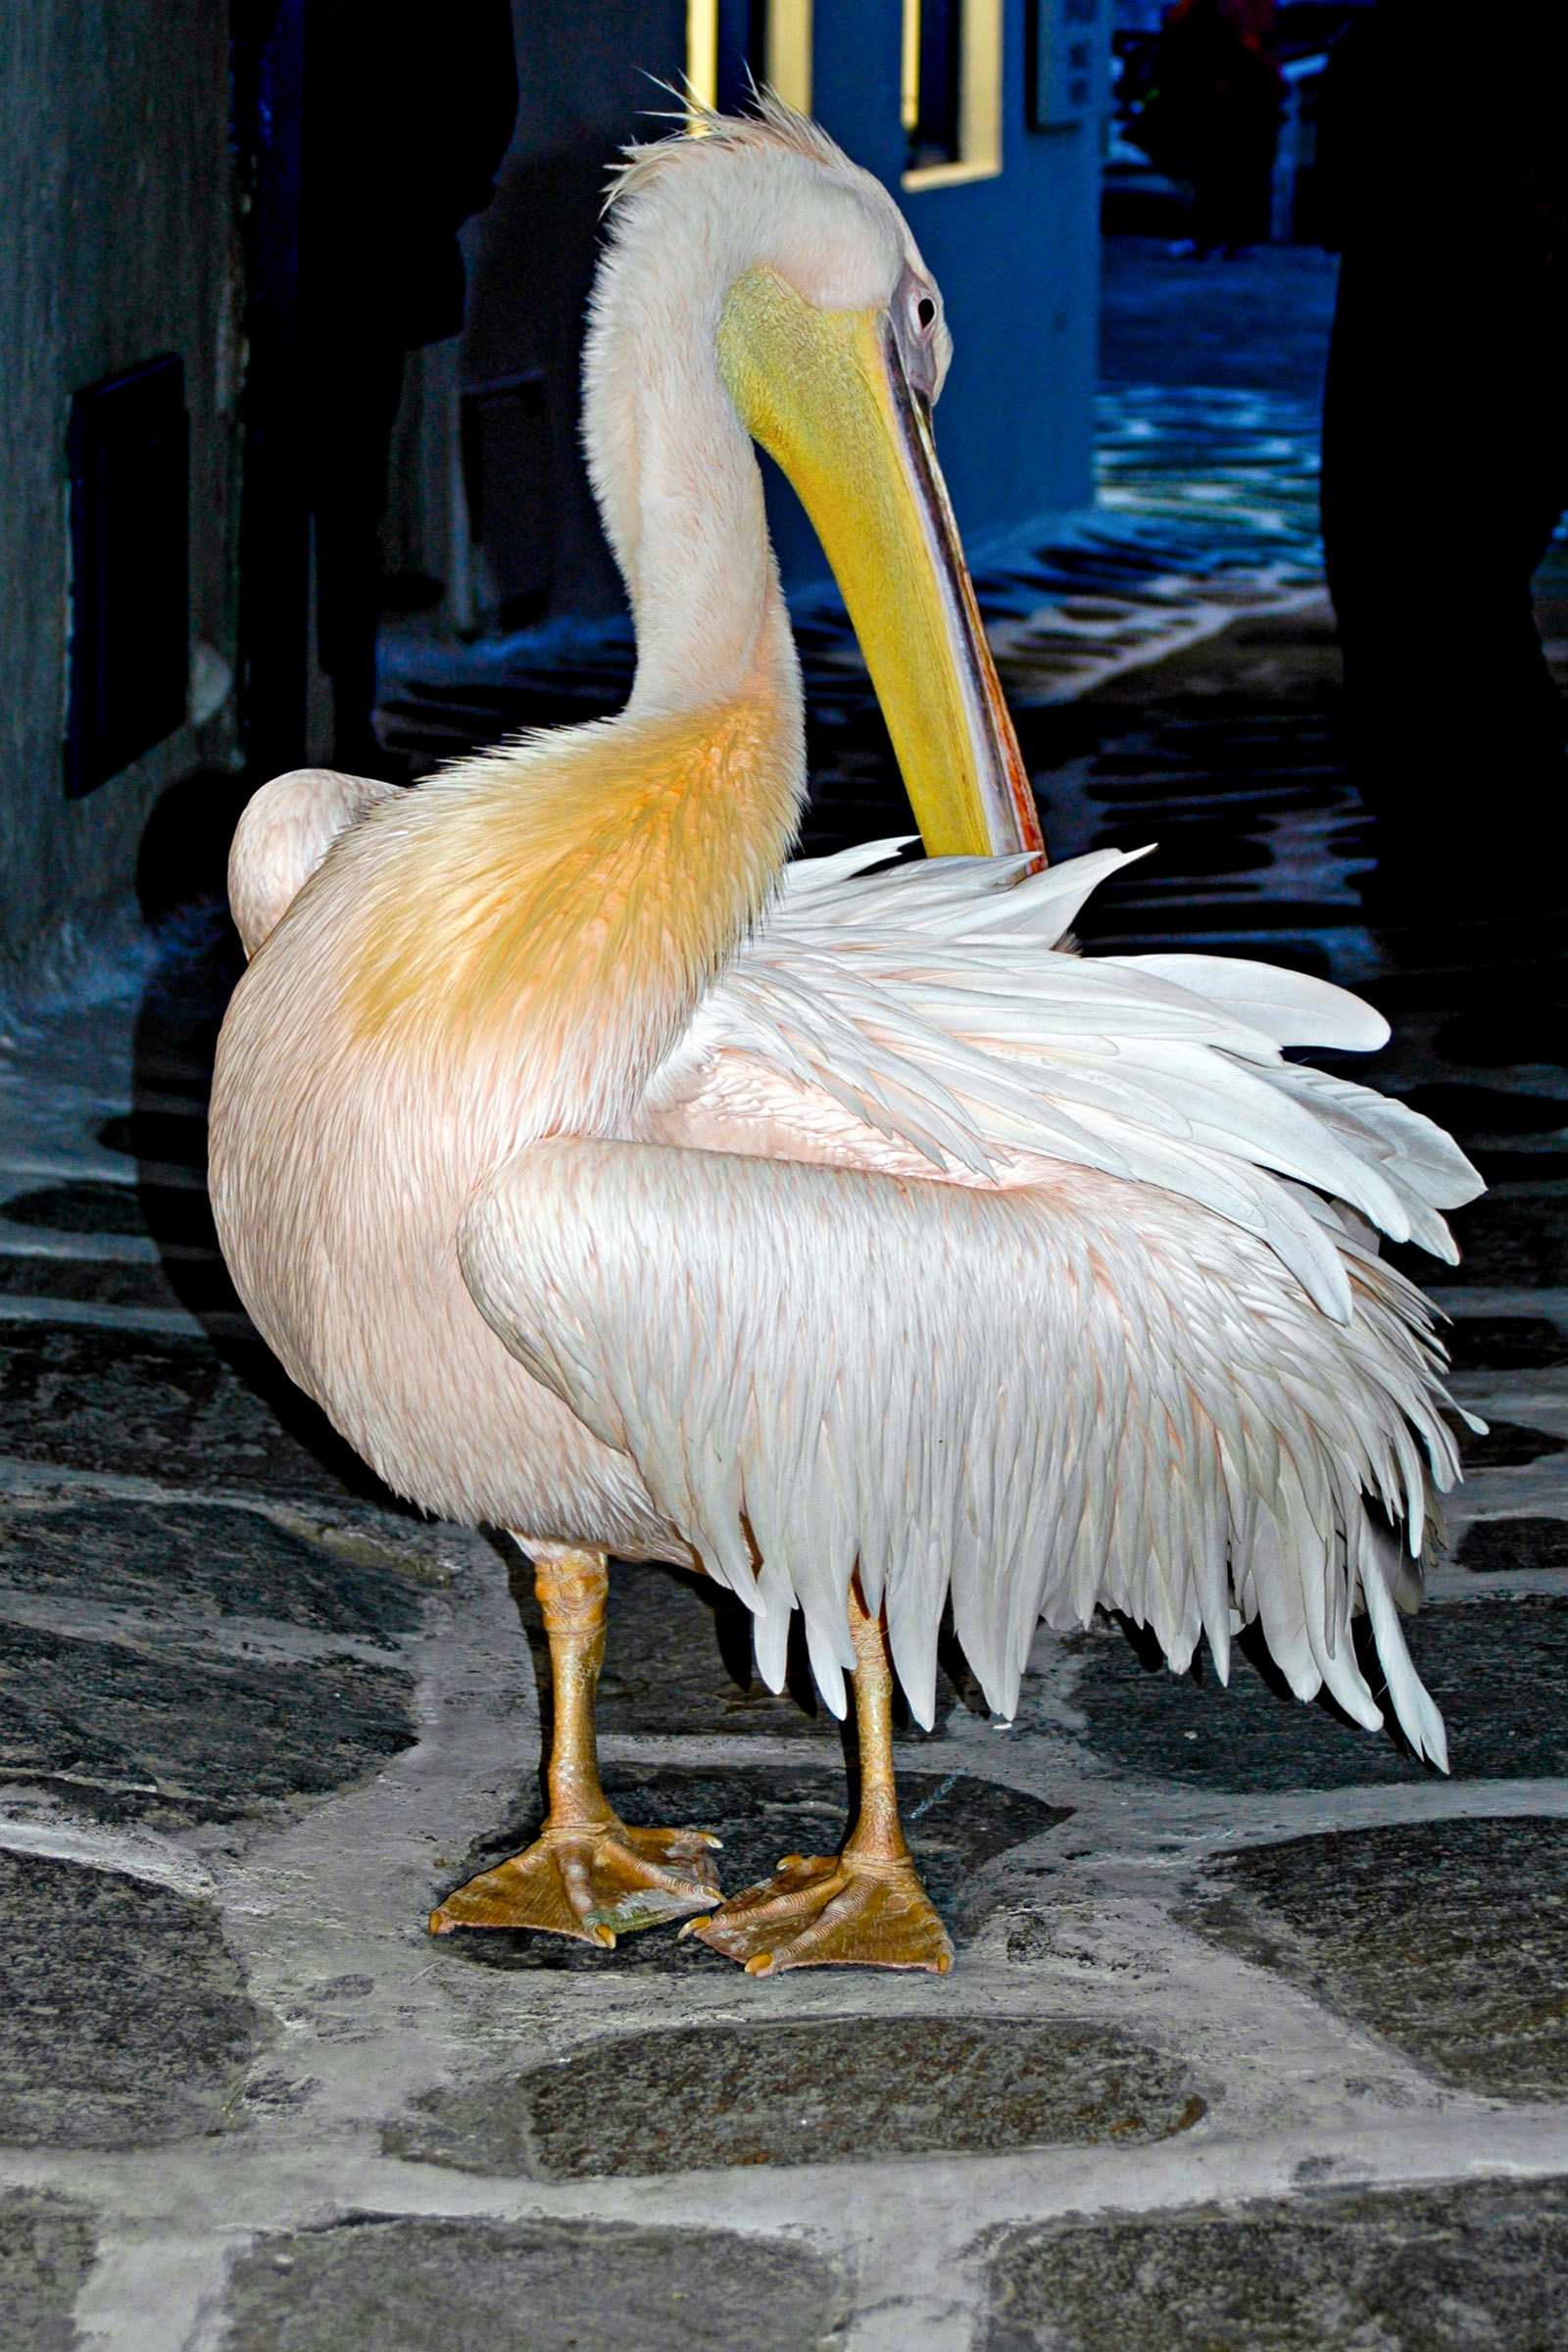 Petros the pelican is Mykonos' mascot